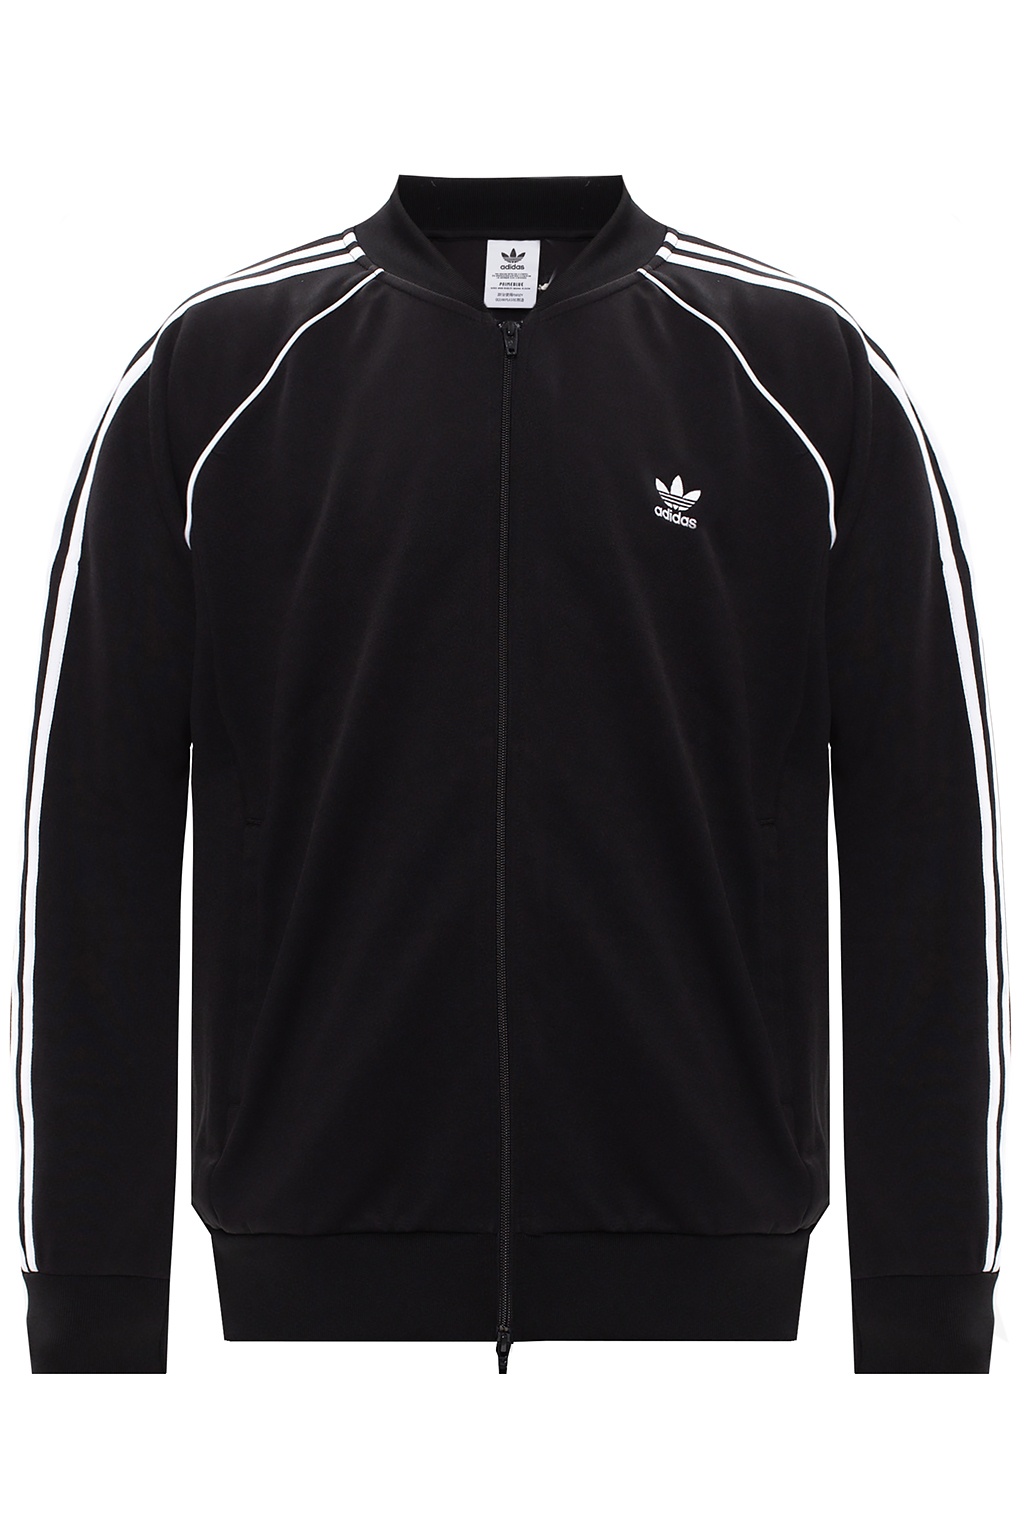 Track Jacket With Logo Adidas Originals Gtbanklr Ic - adidas superstar black track jacket roblox